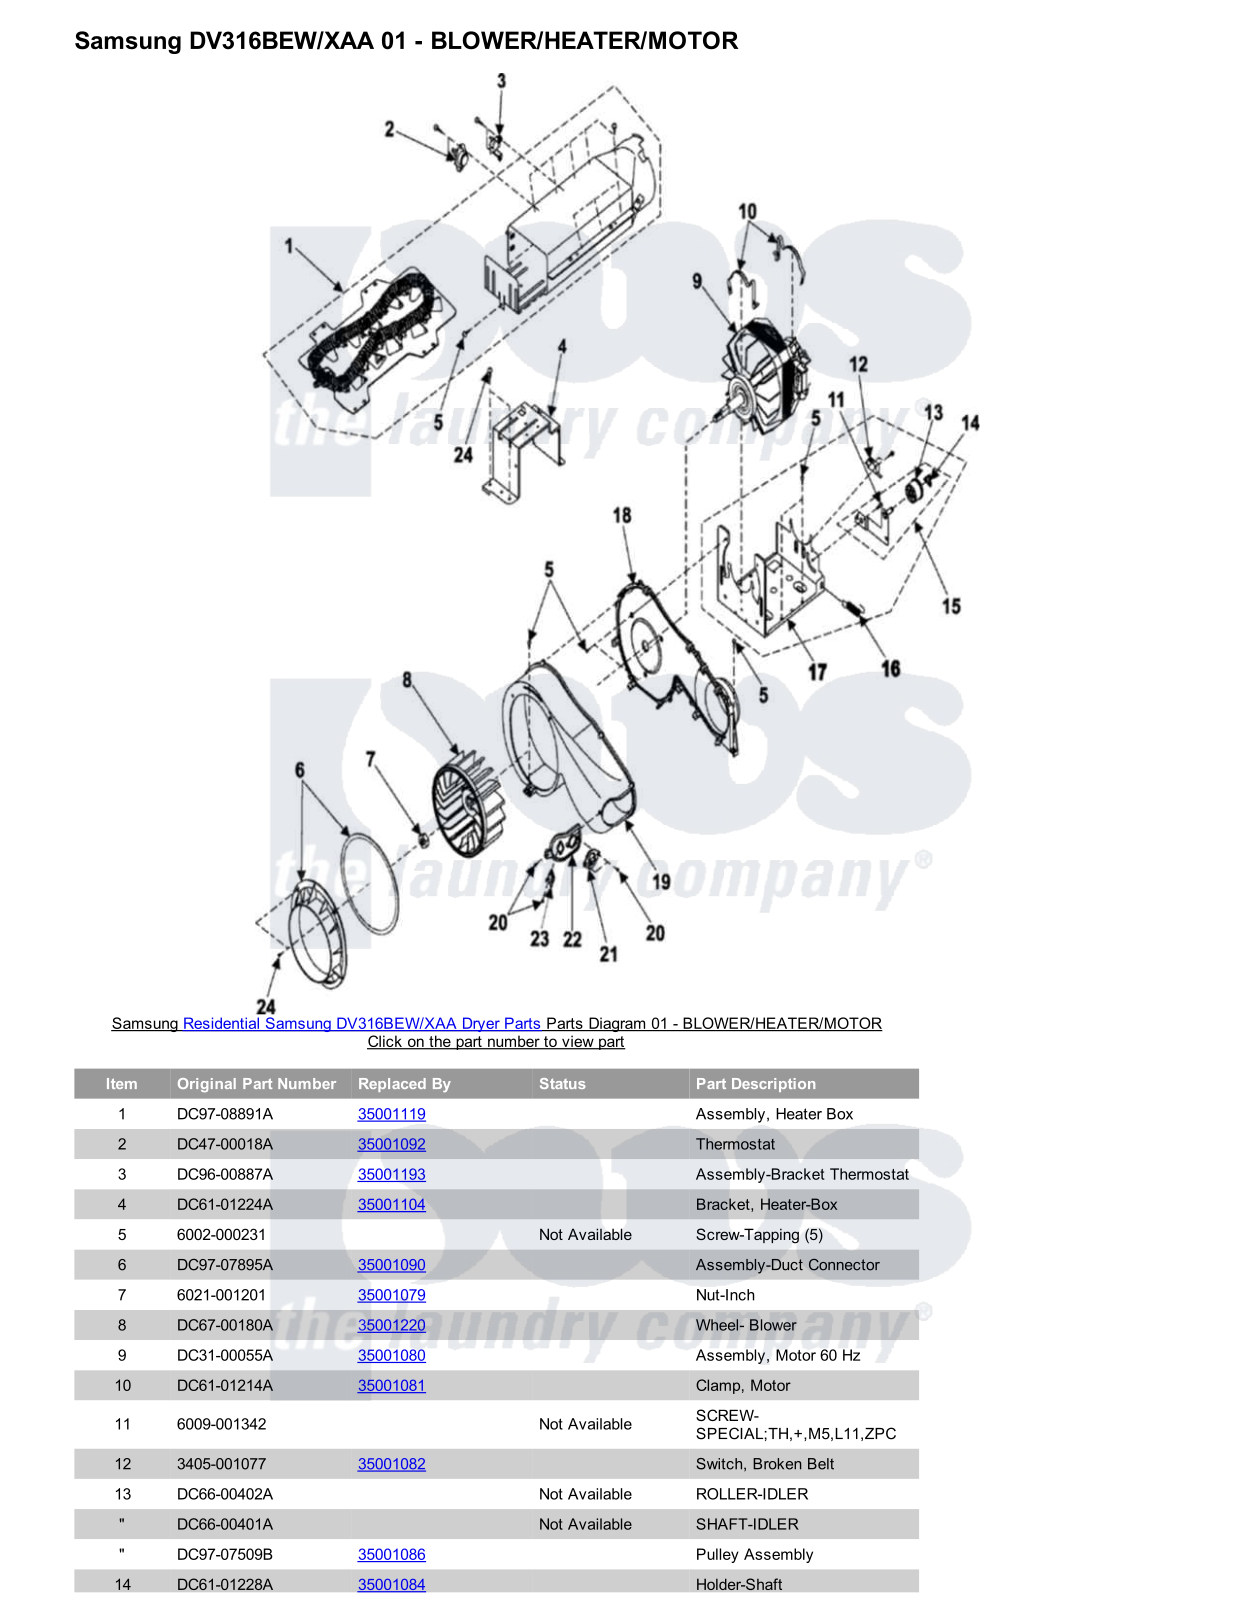 Samsung DV316BEW/XAA Parts Diagram